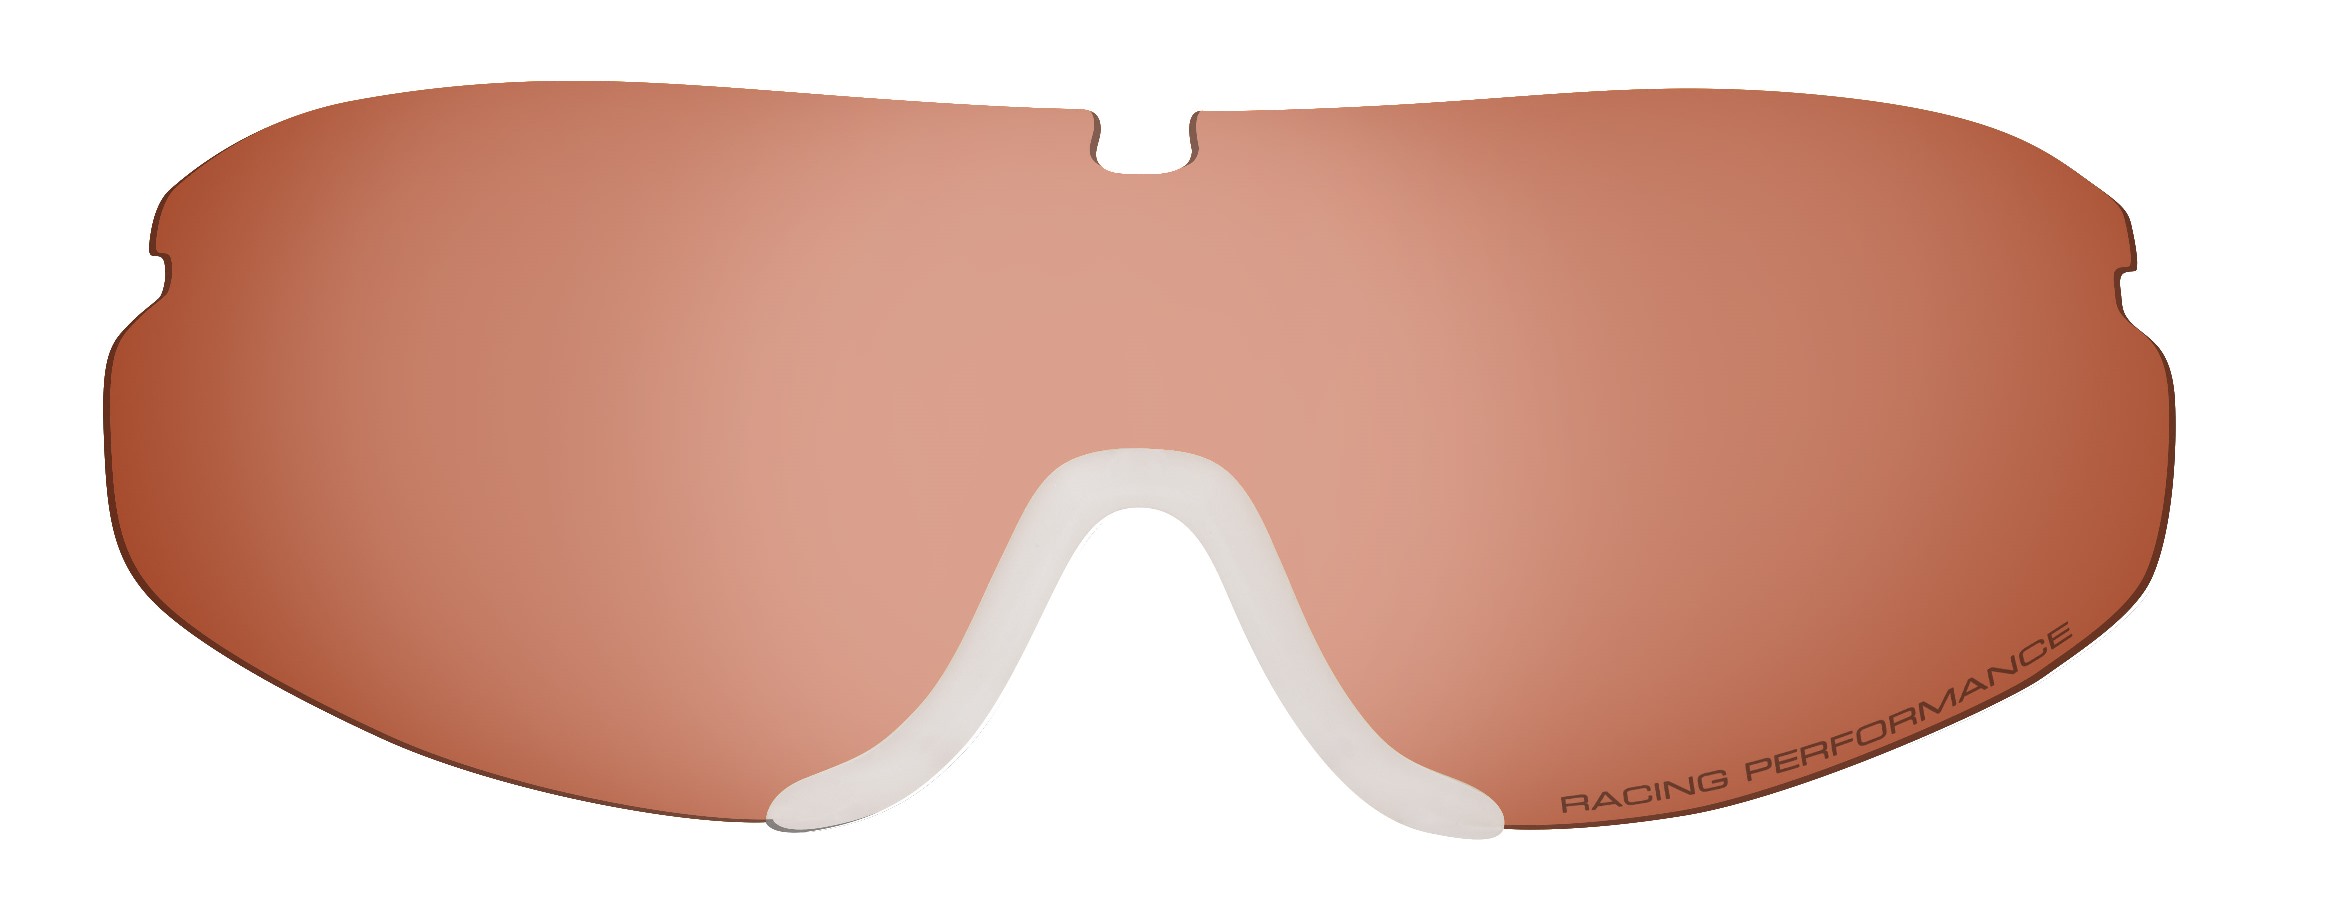 HTGL34/OR Náhradní čočka k lyžařským brýlím   CROSS HTG34 oranžová